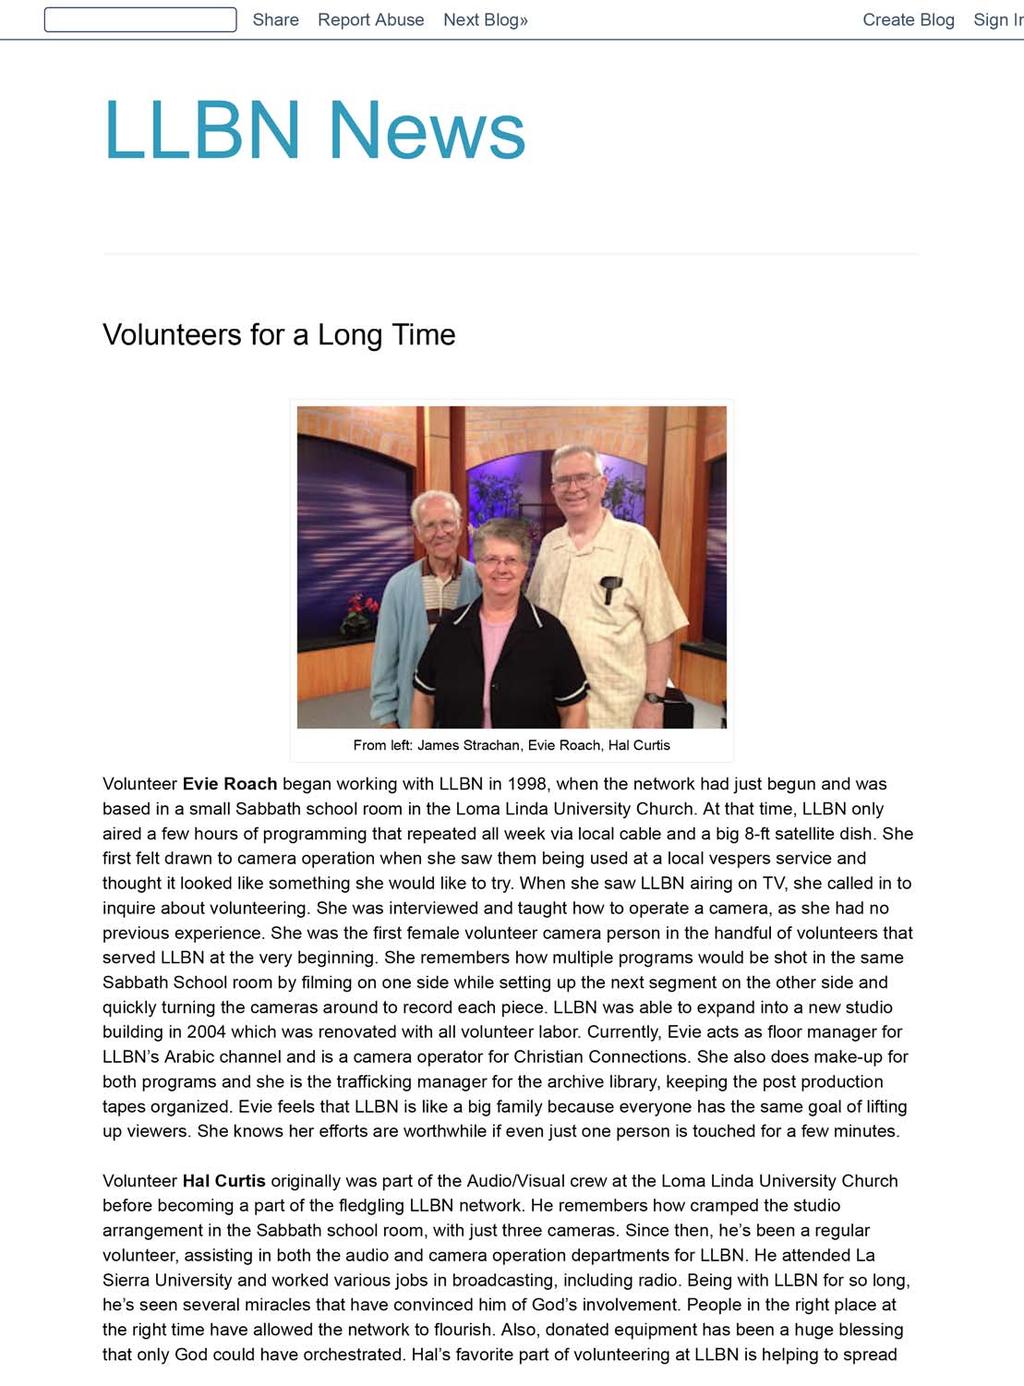 LLBN News: Volunteers for a Long Time http://llbnnews.blogspot.